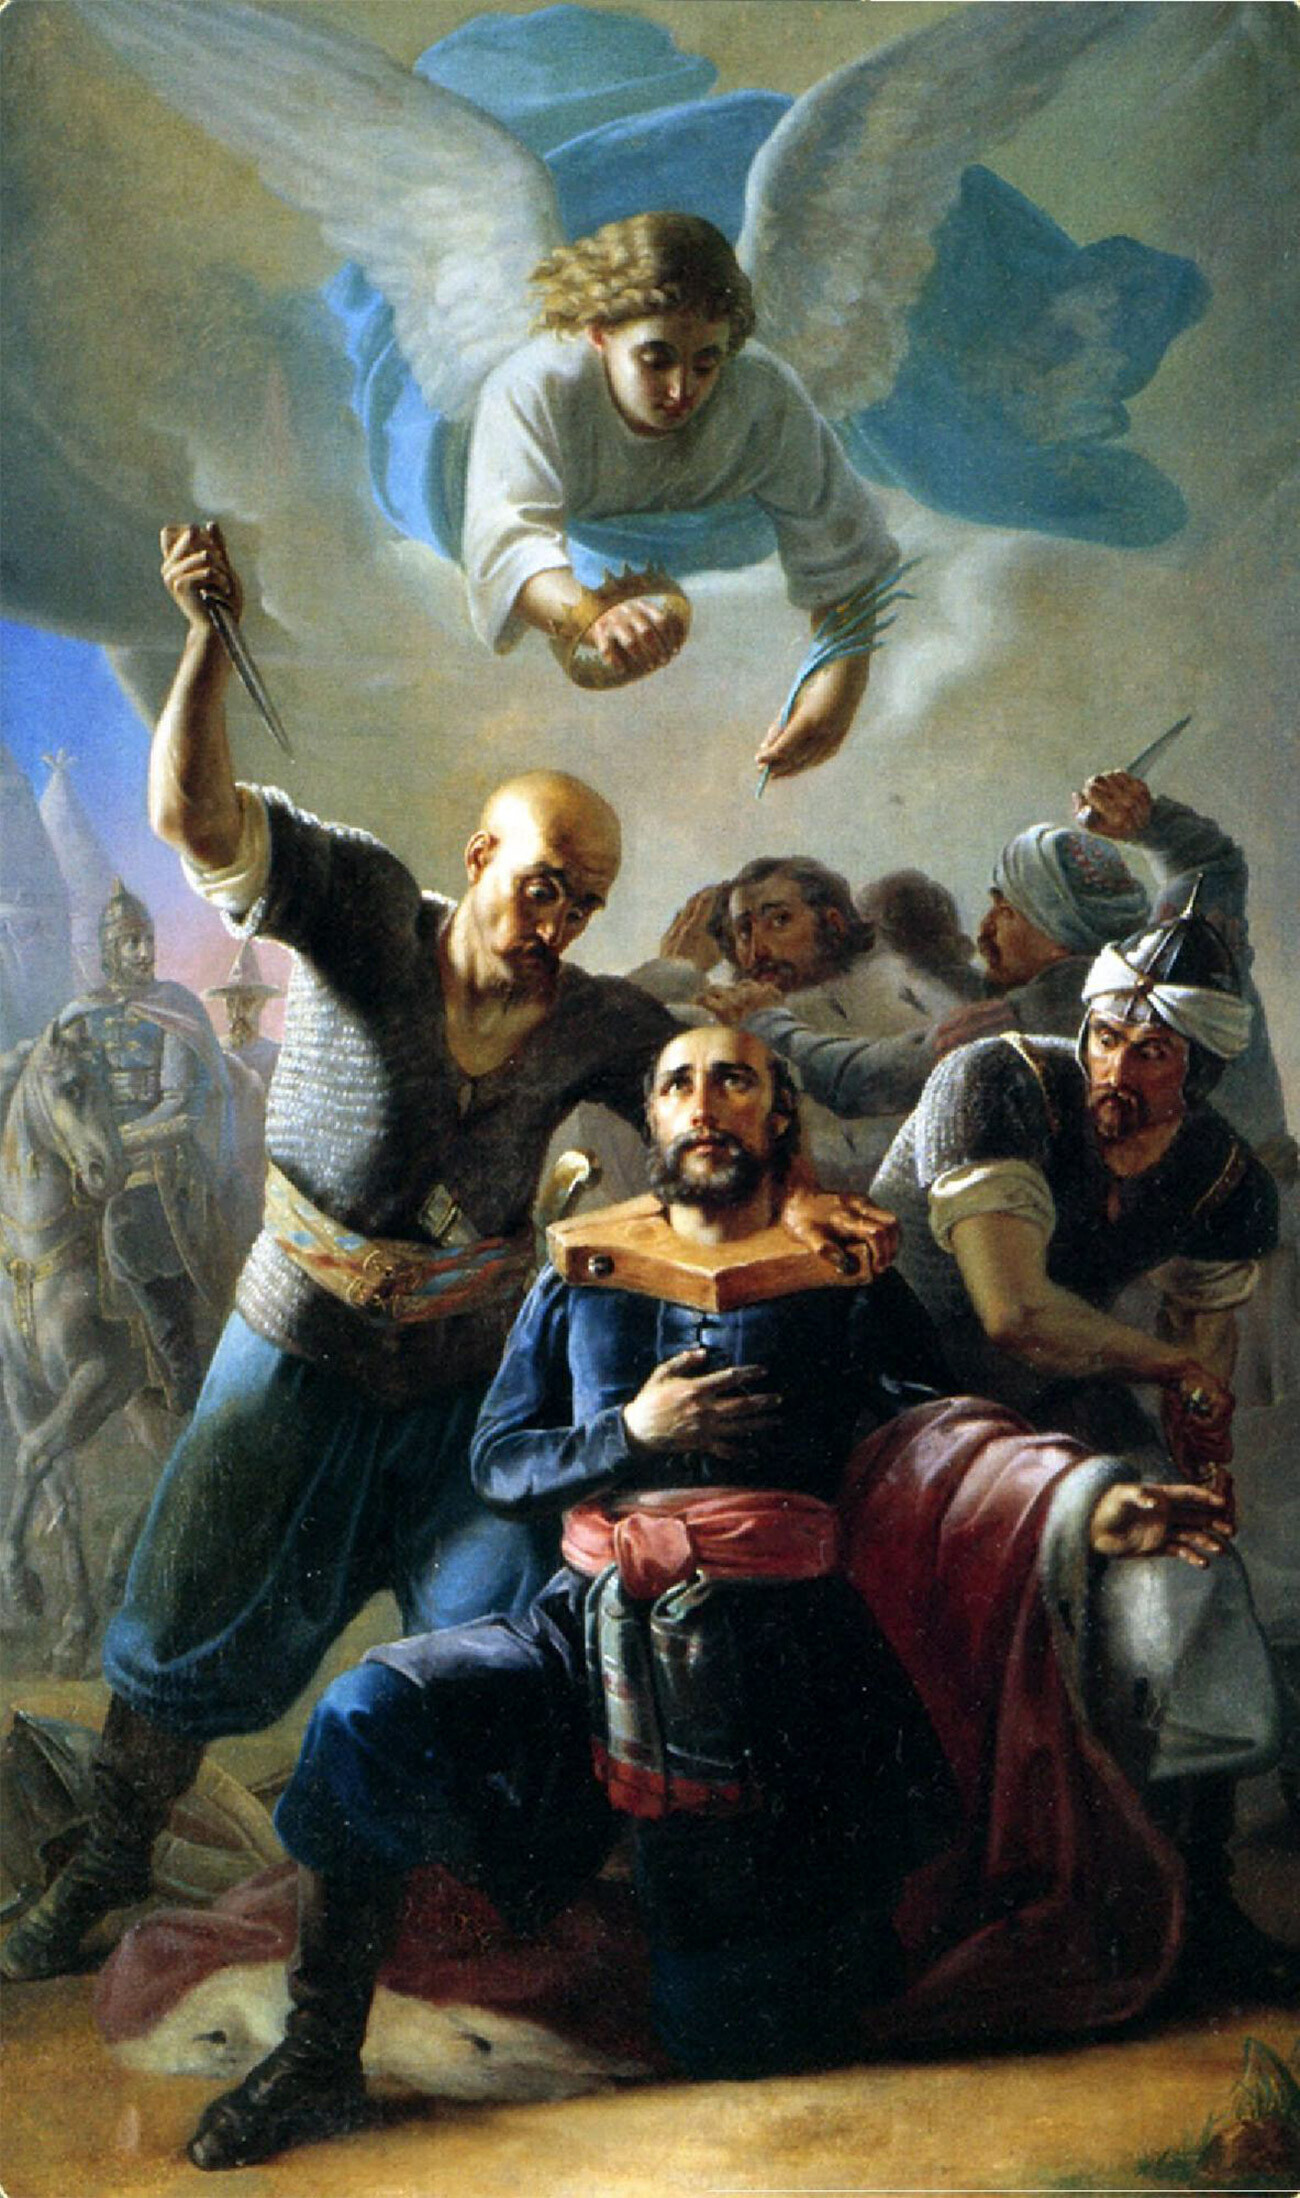 A morte de Mikhail de Tver.

